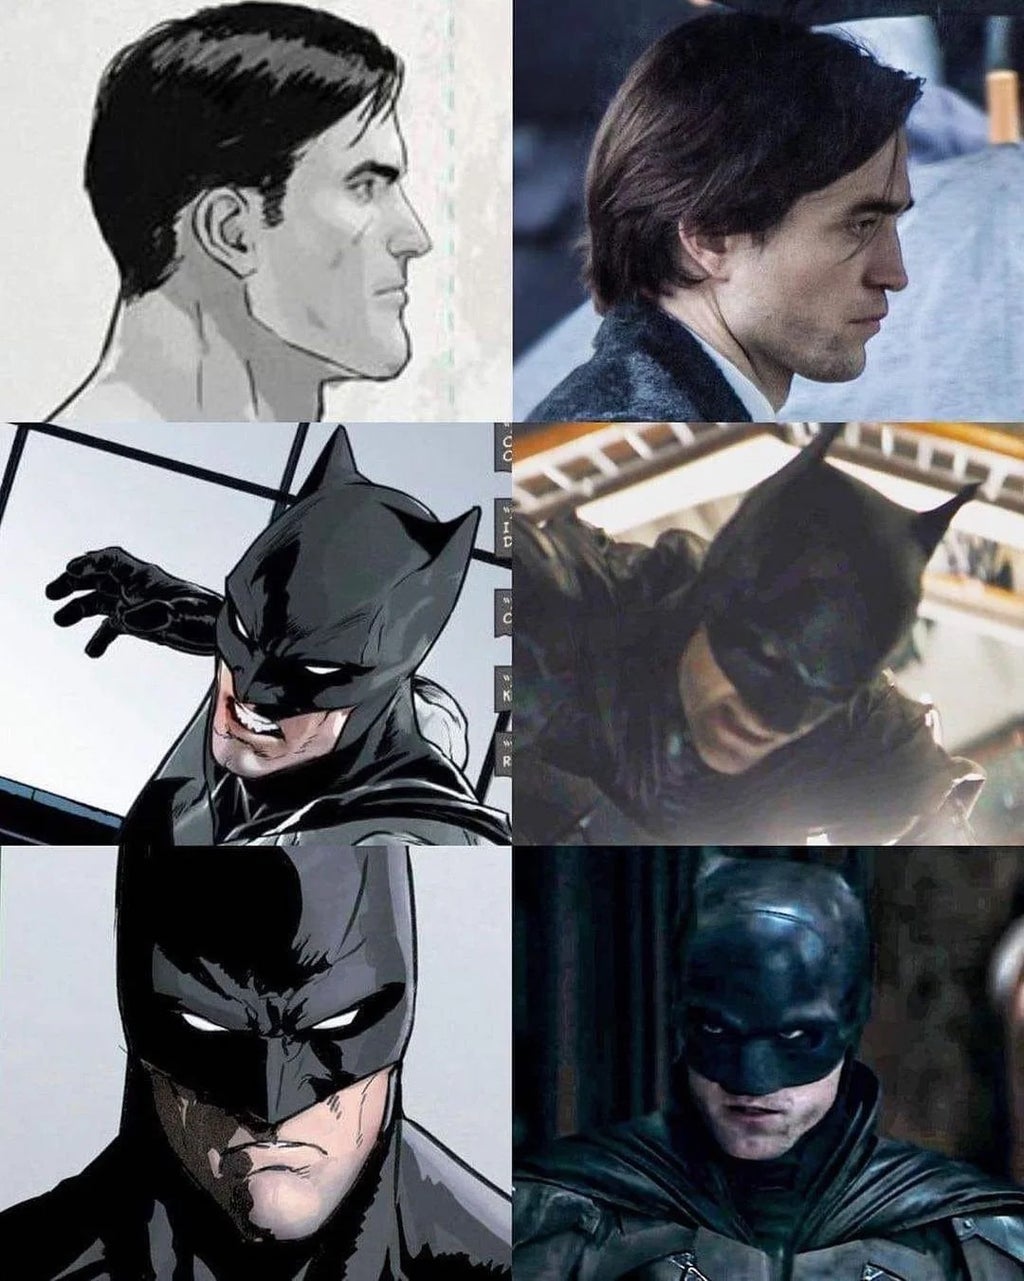 Screenshot showing the parallels between the Batman comics and the new Batman movie.